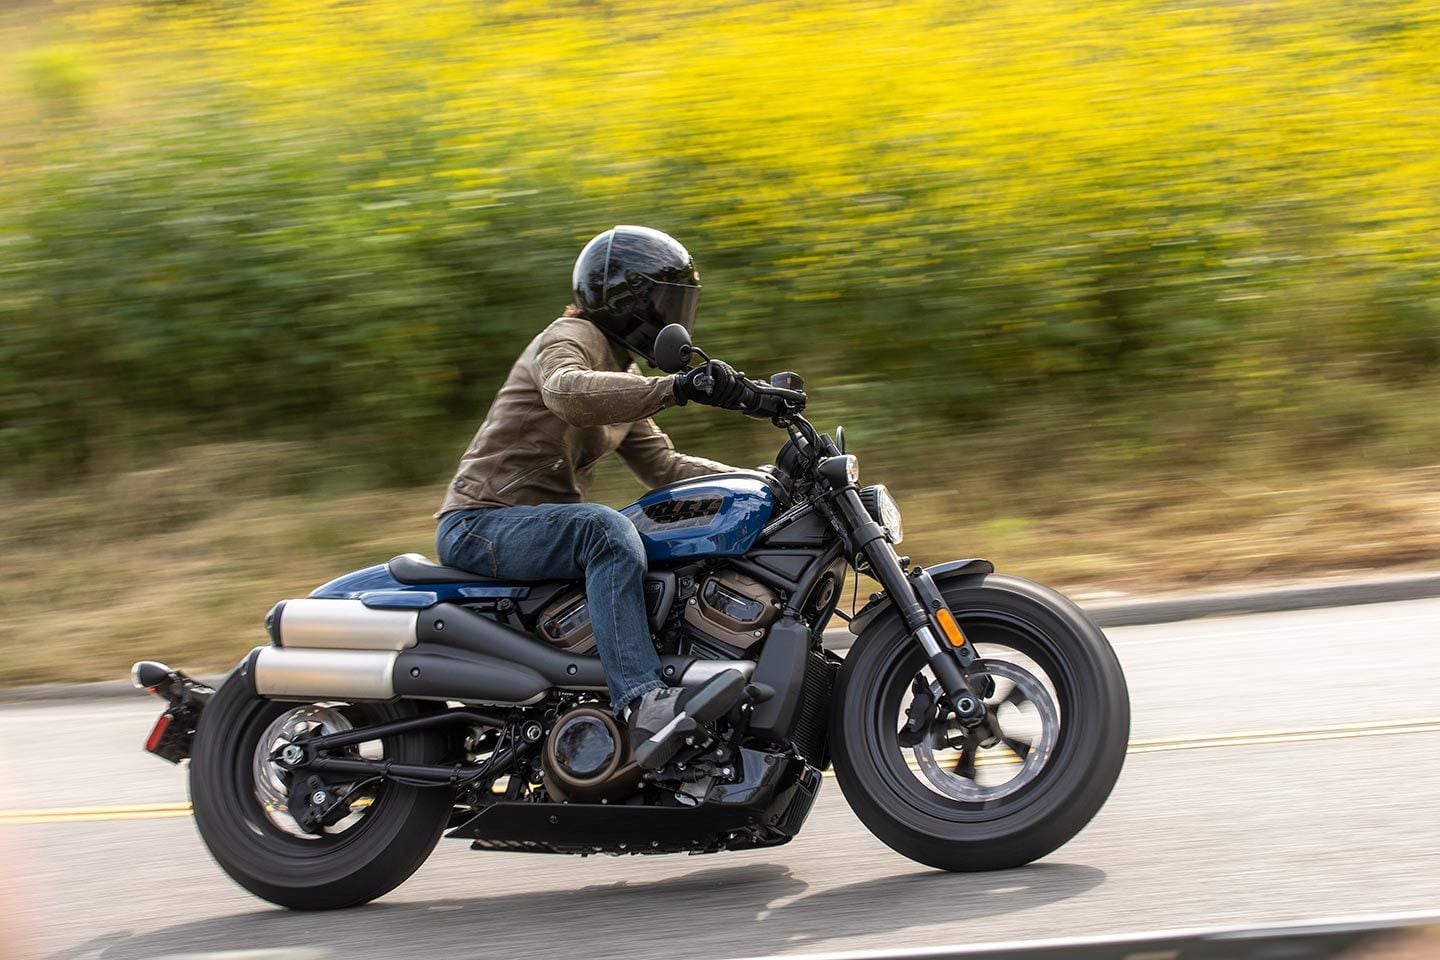 Harley-Davidson Sportster S Ride Review